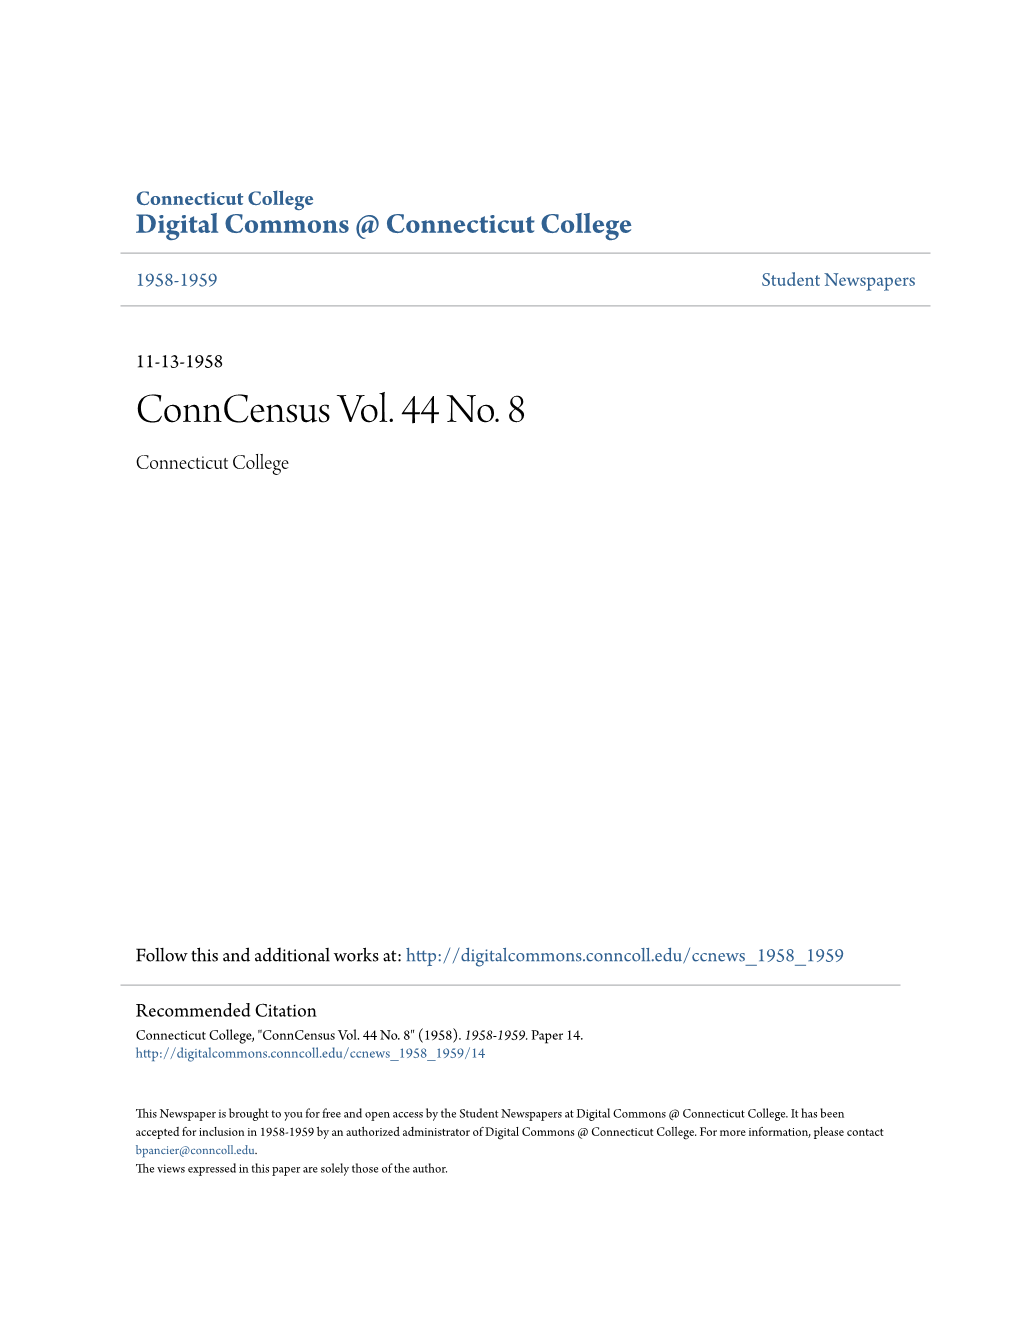 Conncensus Vol. 44 No. 8 Connecticut College